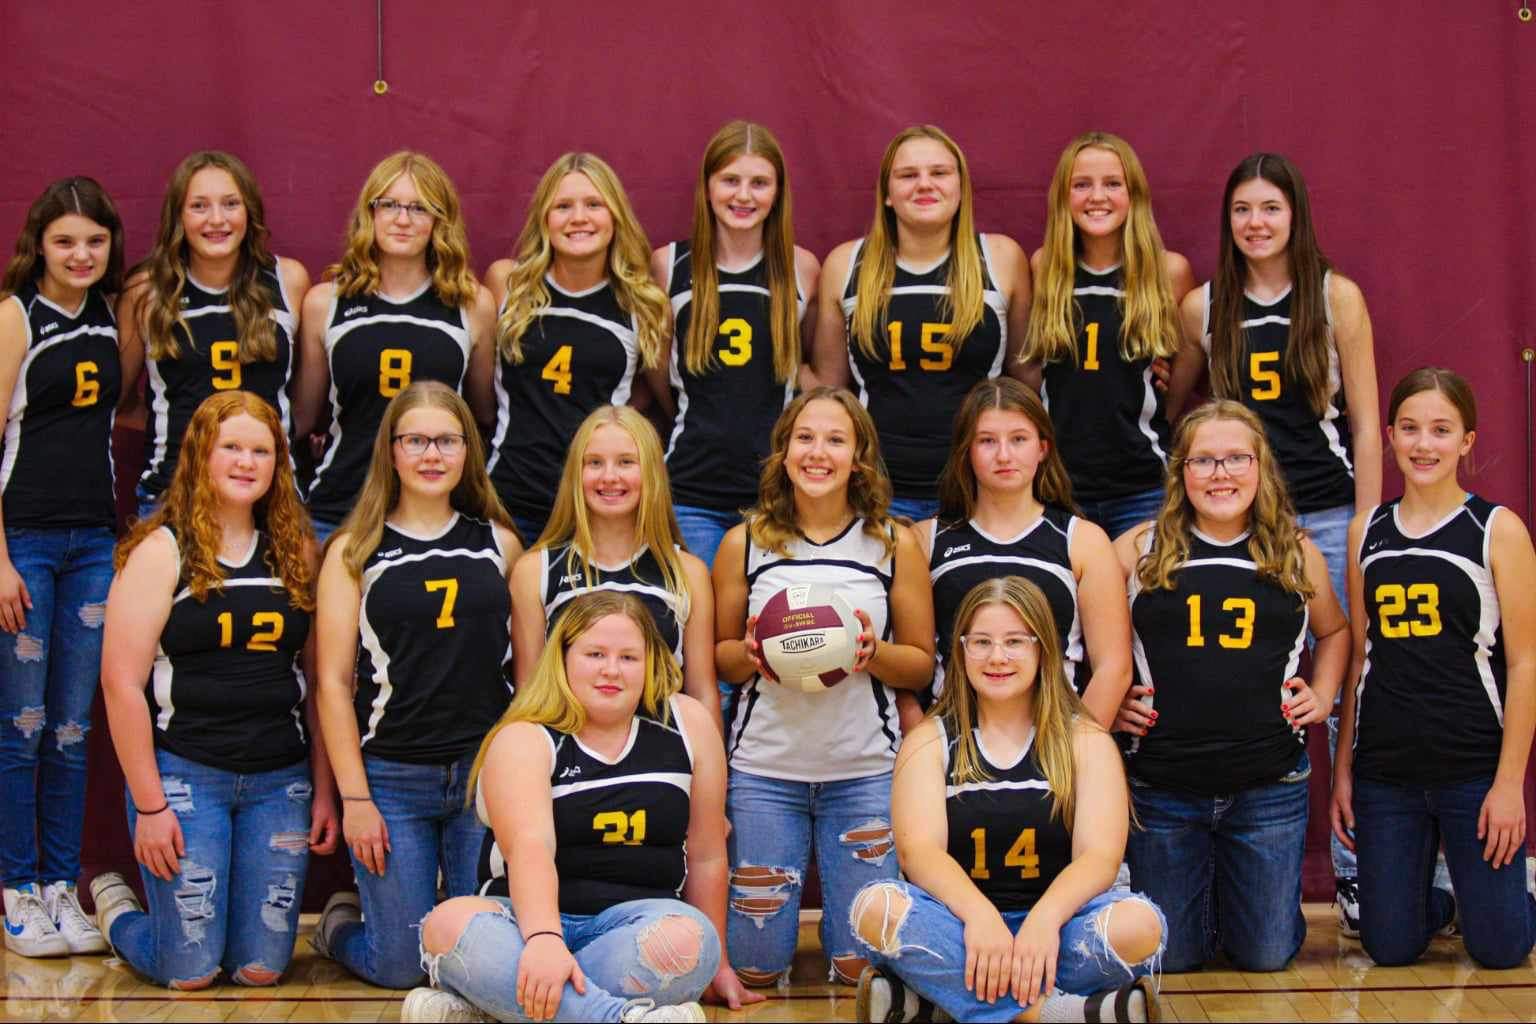 8th Grade Volleyball Team Photo